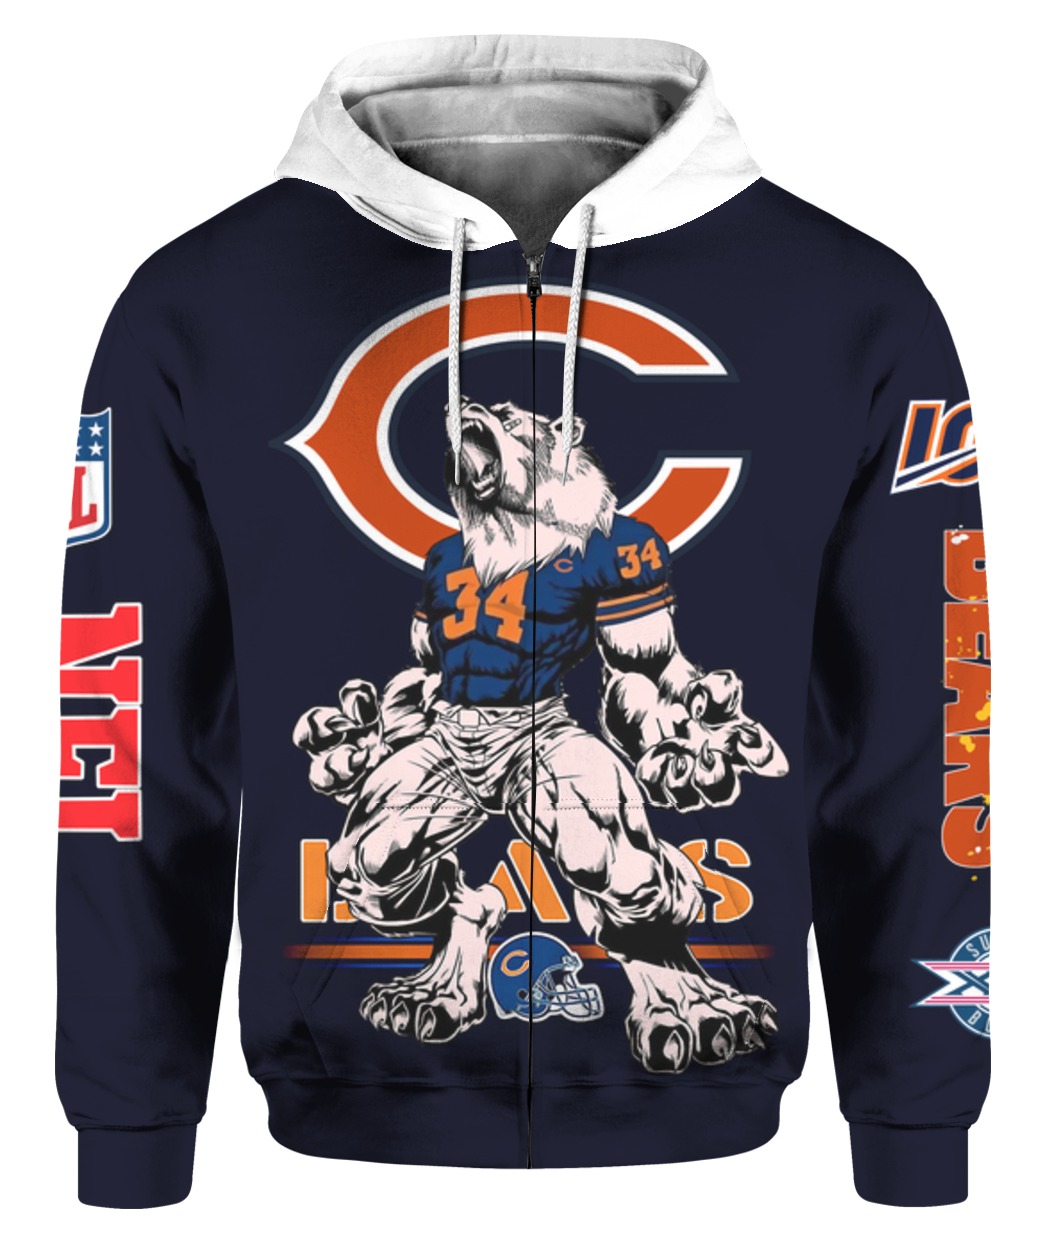 Chicago bears mascot all over print zip hoodie